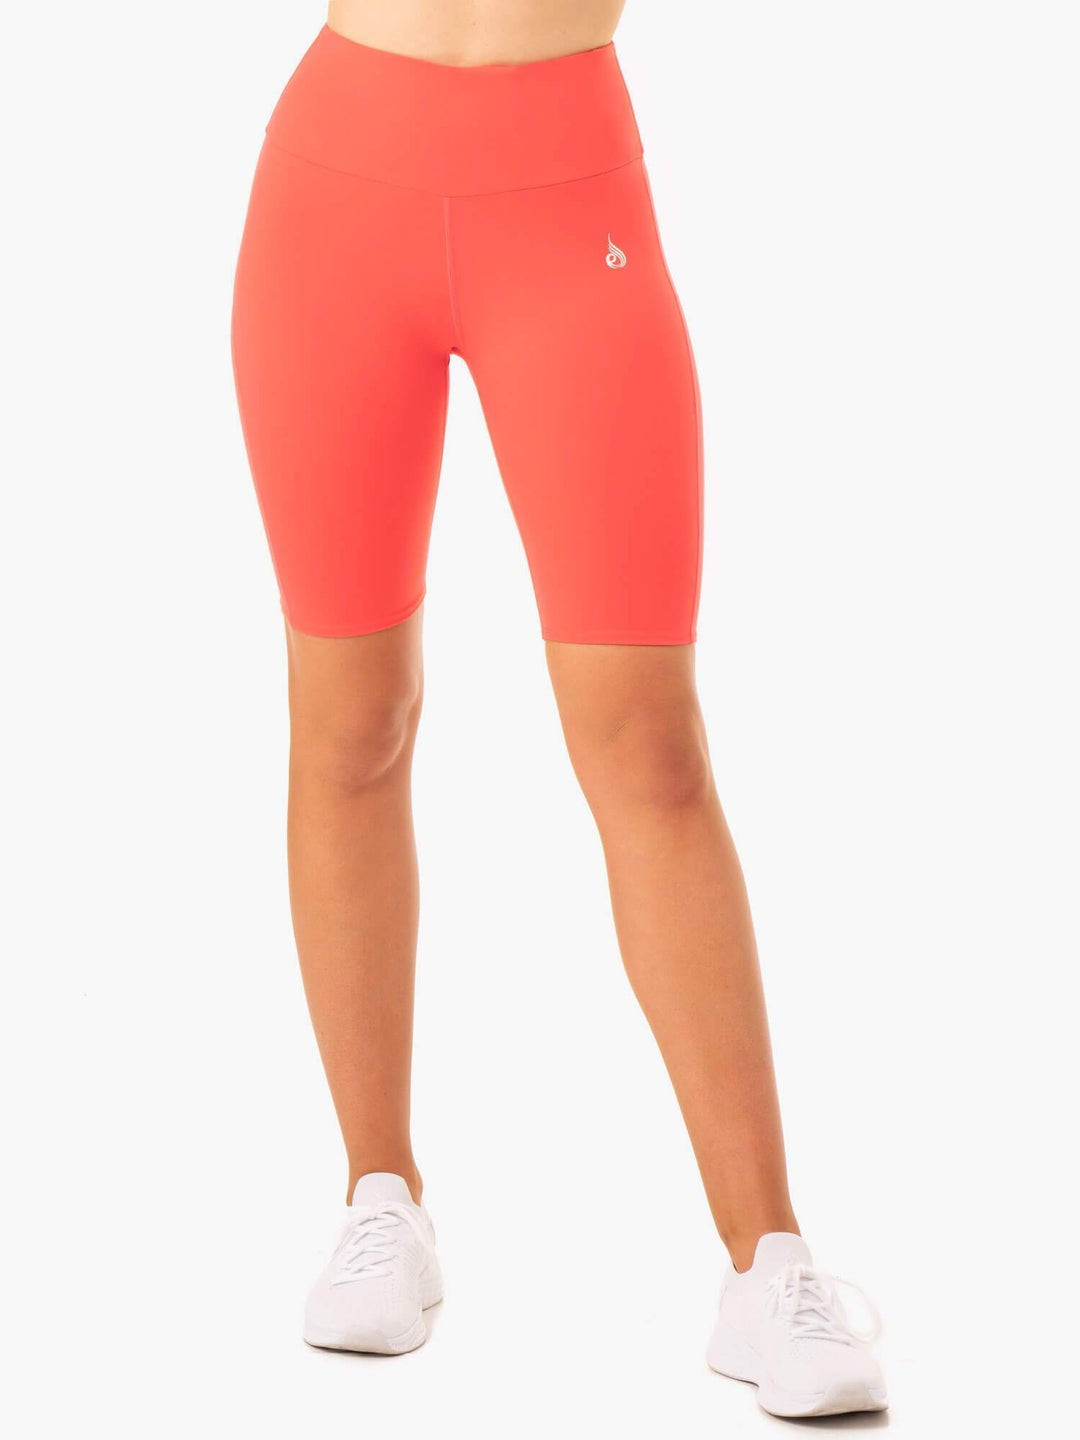 Staples Scrunch Bum Bike Shorts - Coral Clothing Ryderwear 